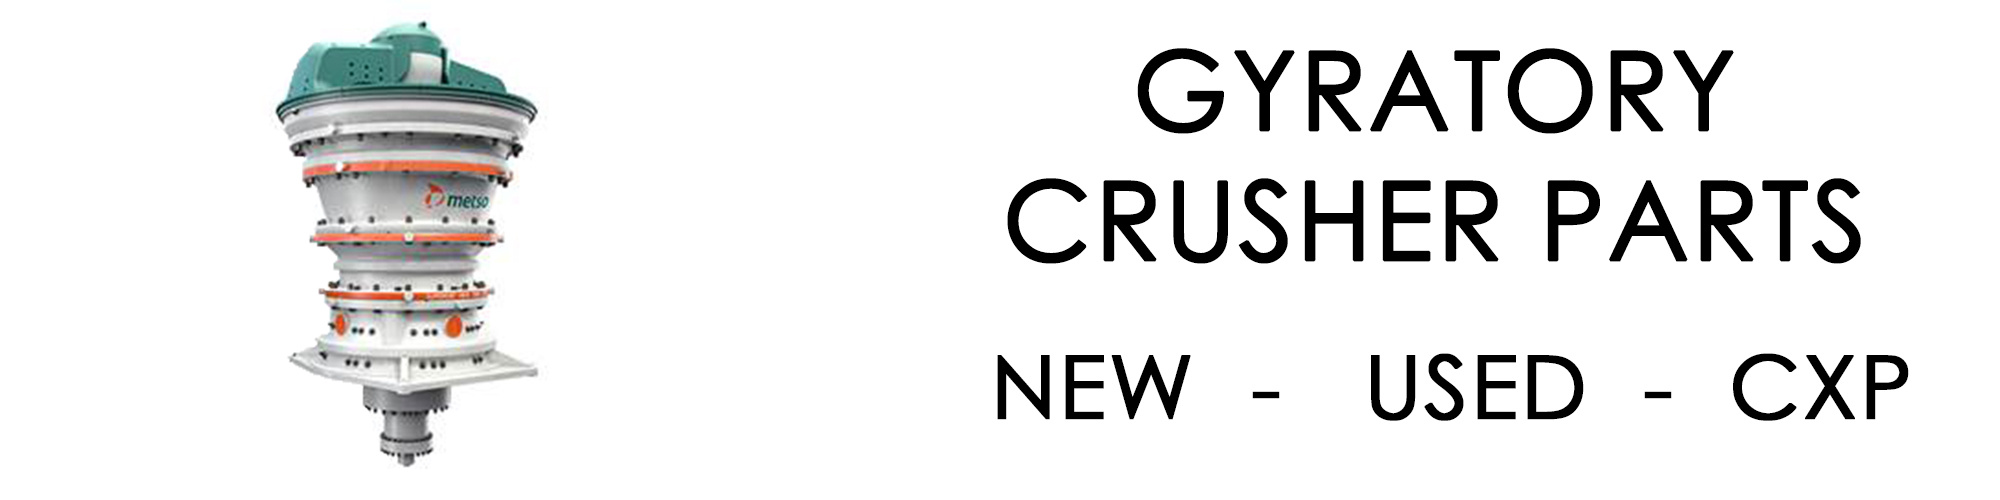 Crusher - Gyratory